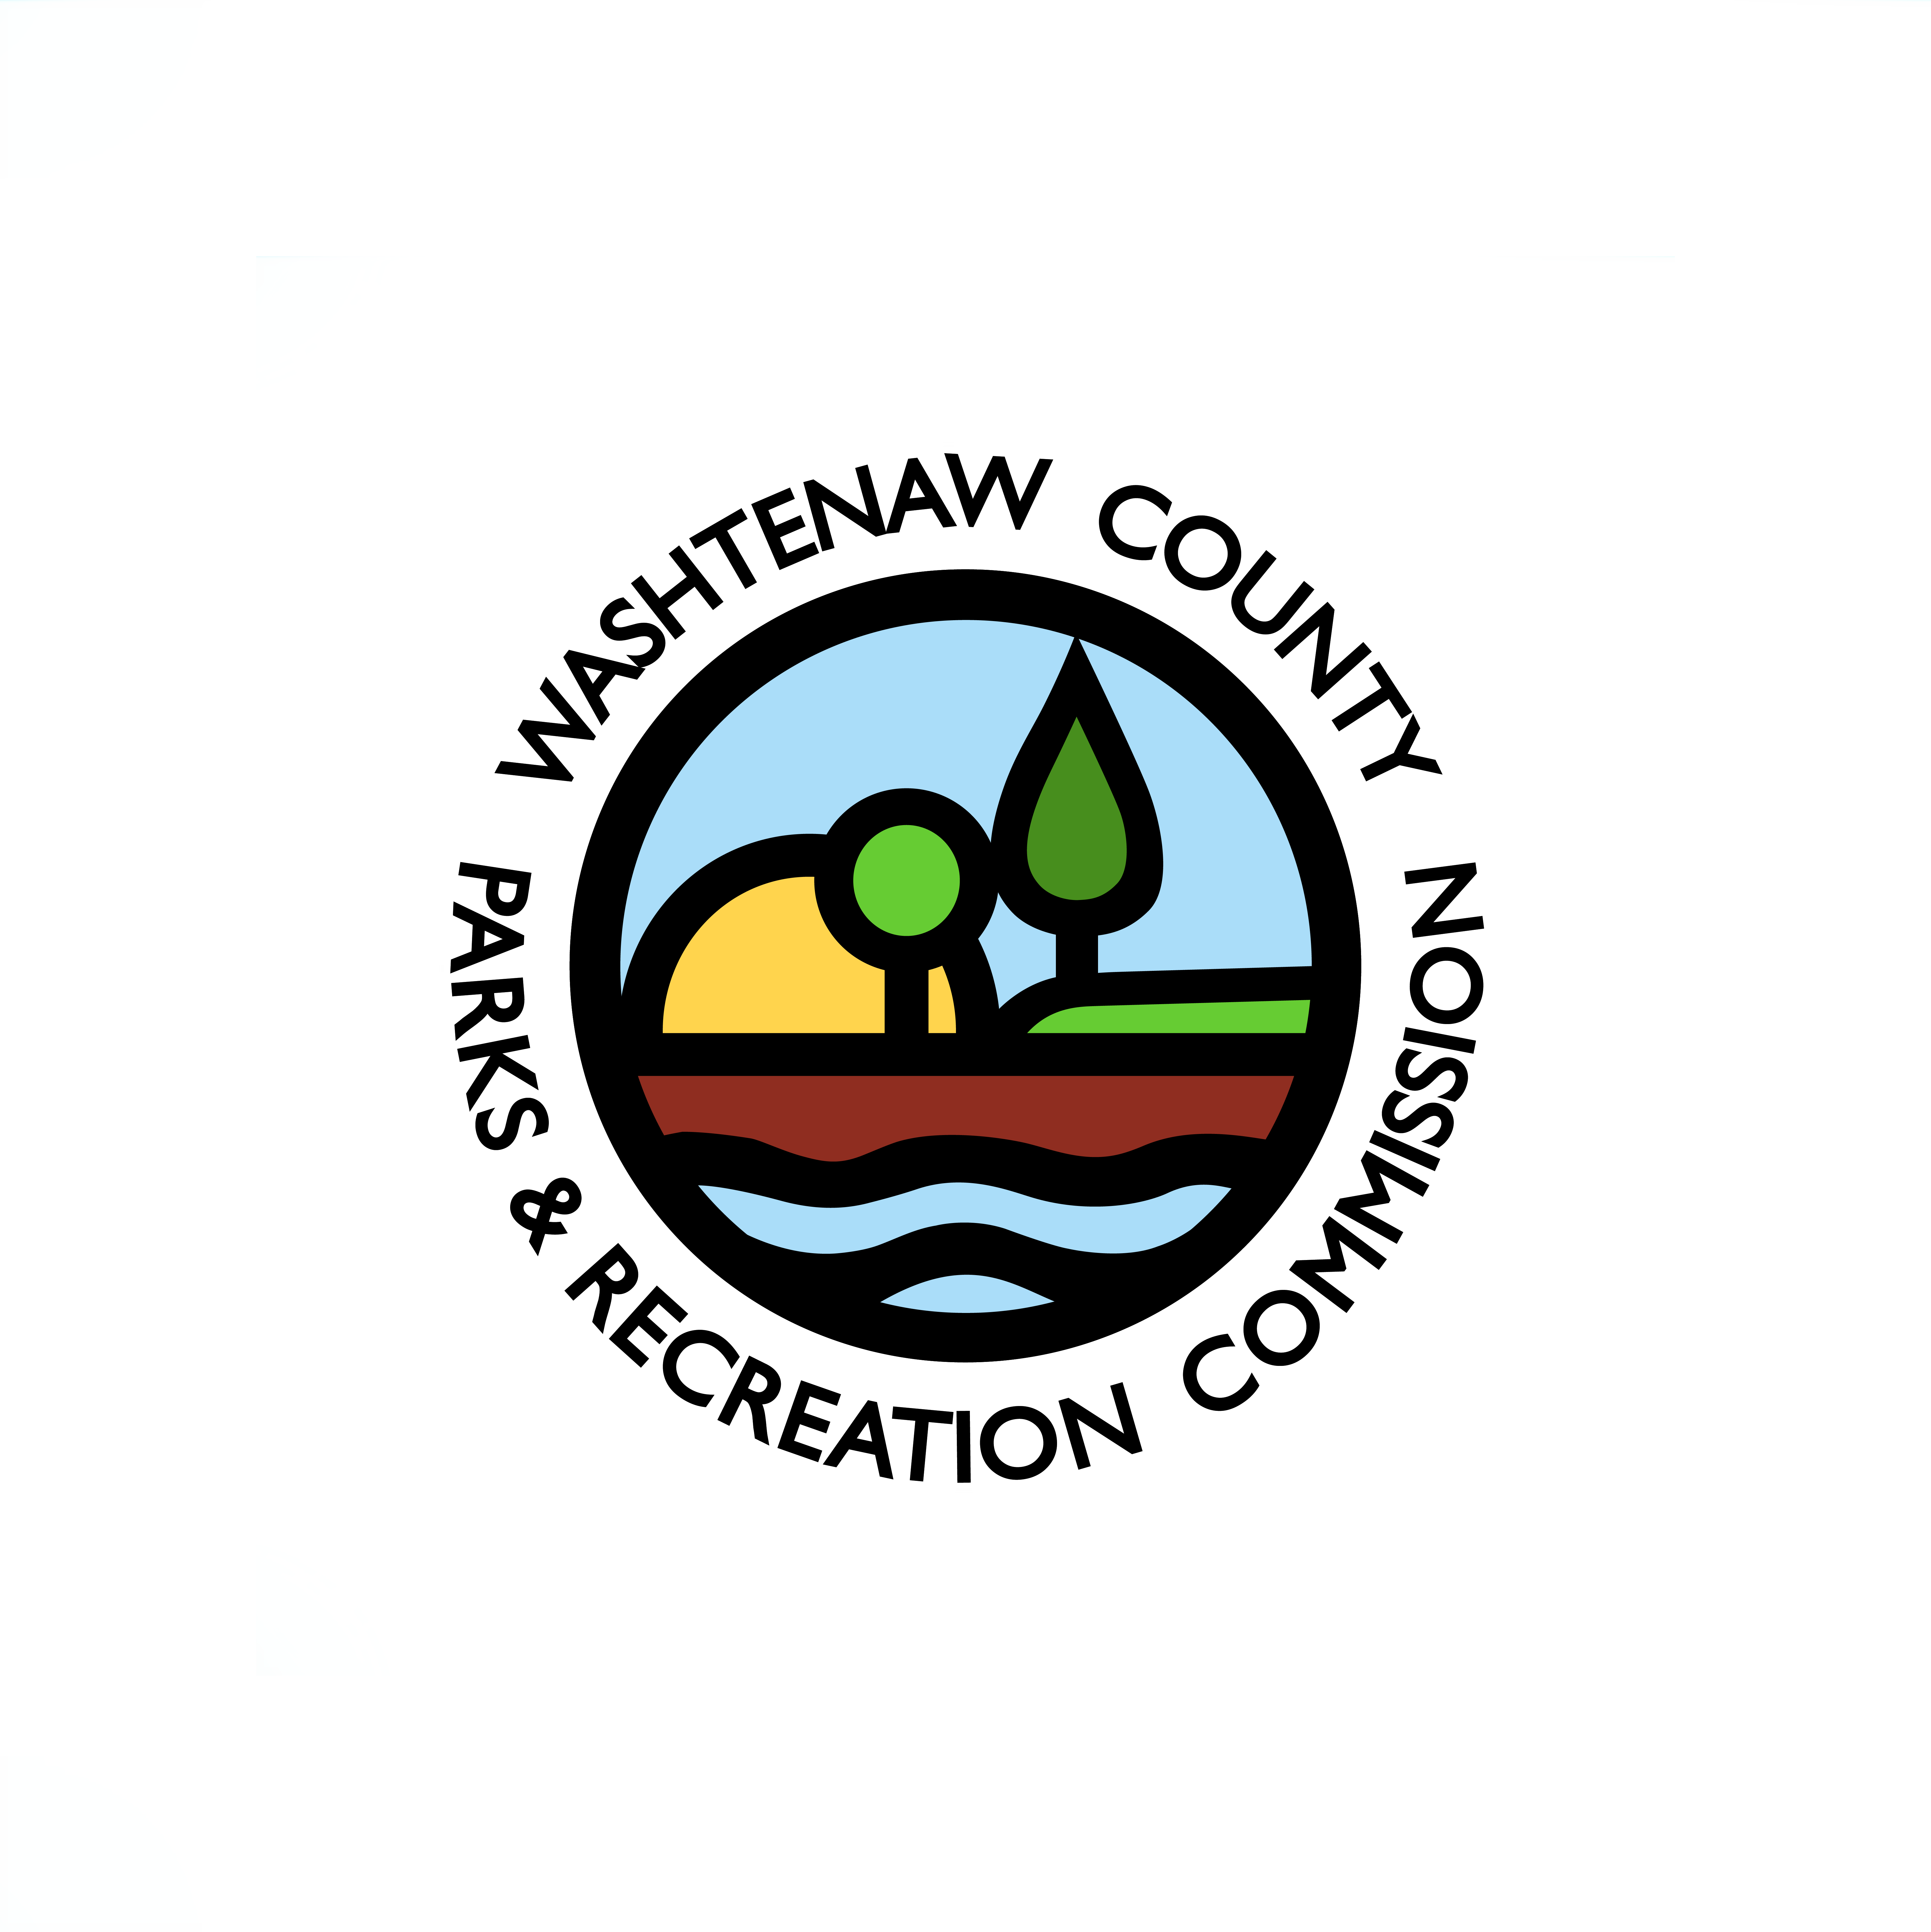 Washtenaw County Parks & Rec